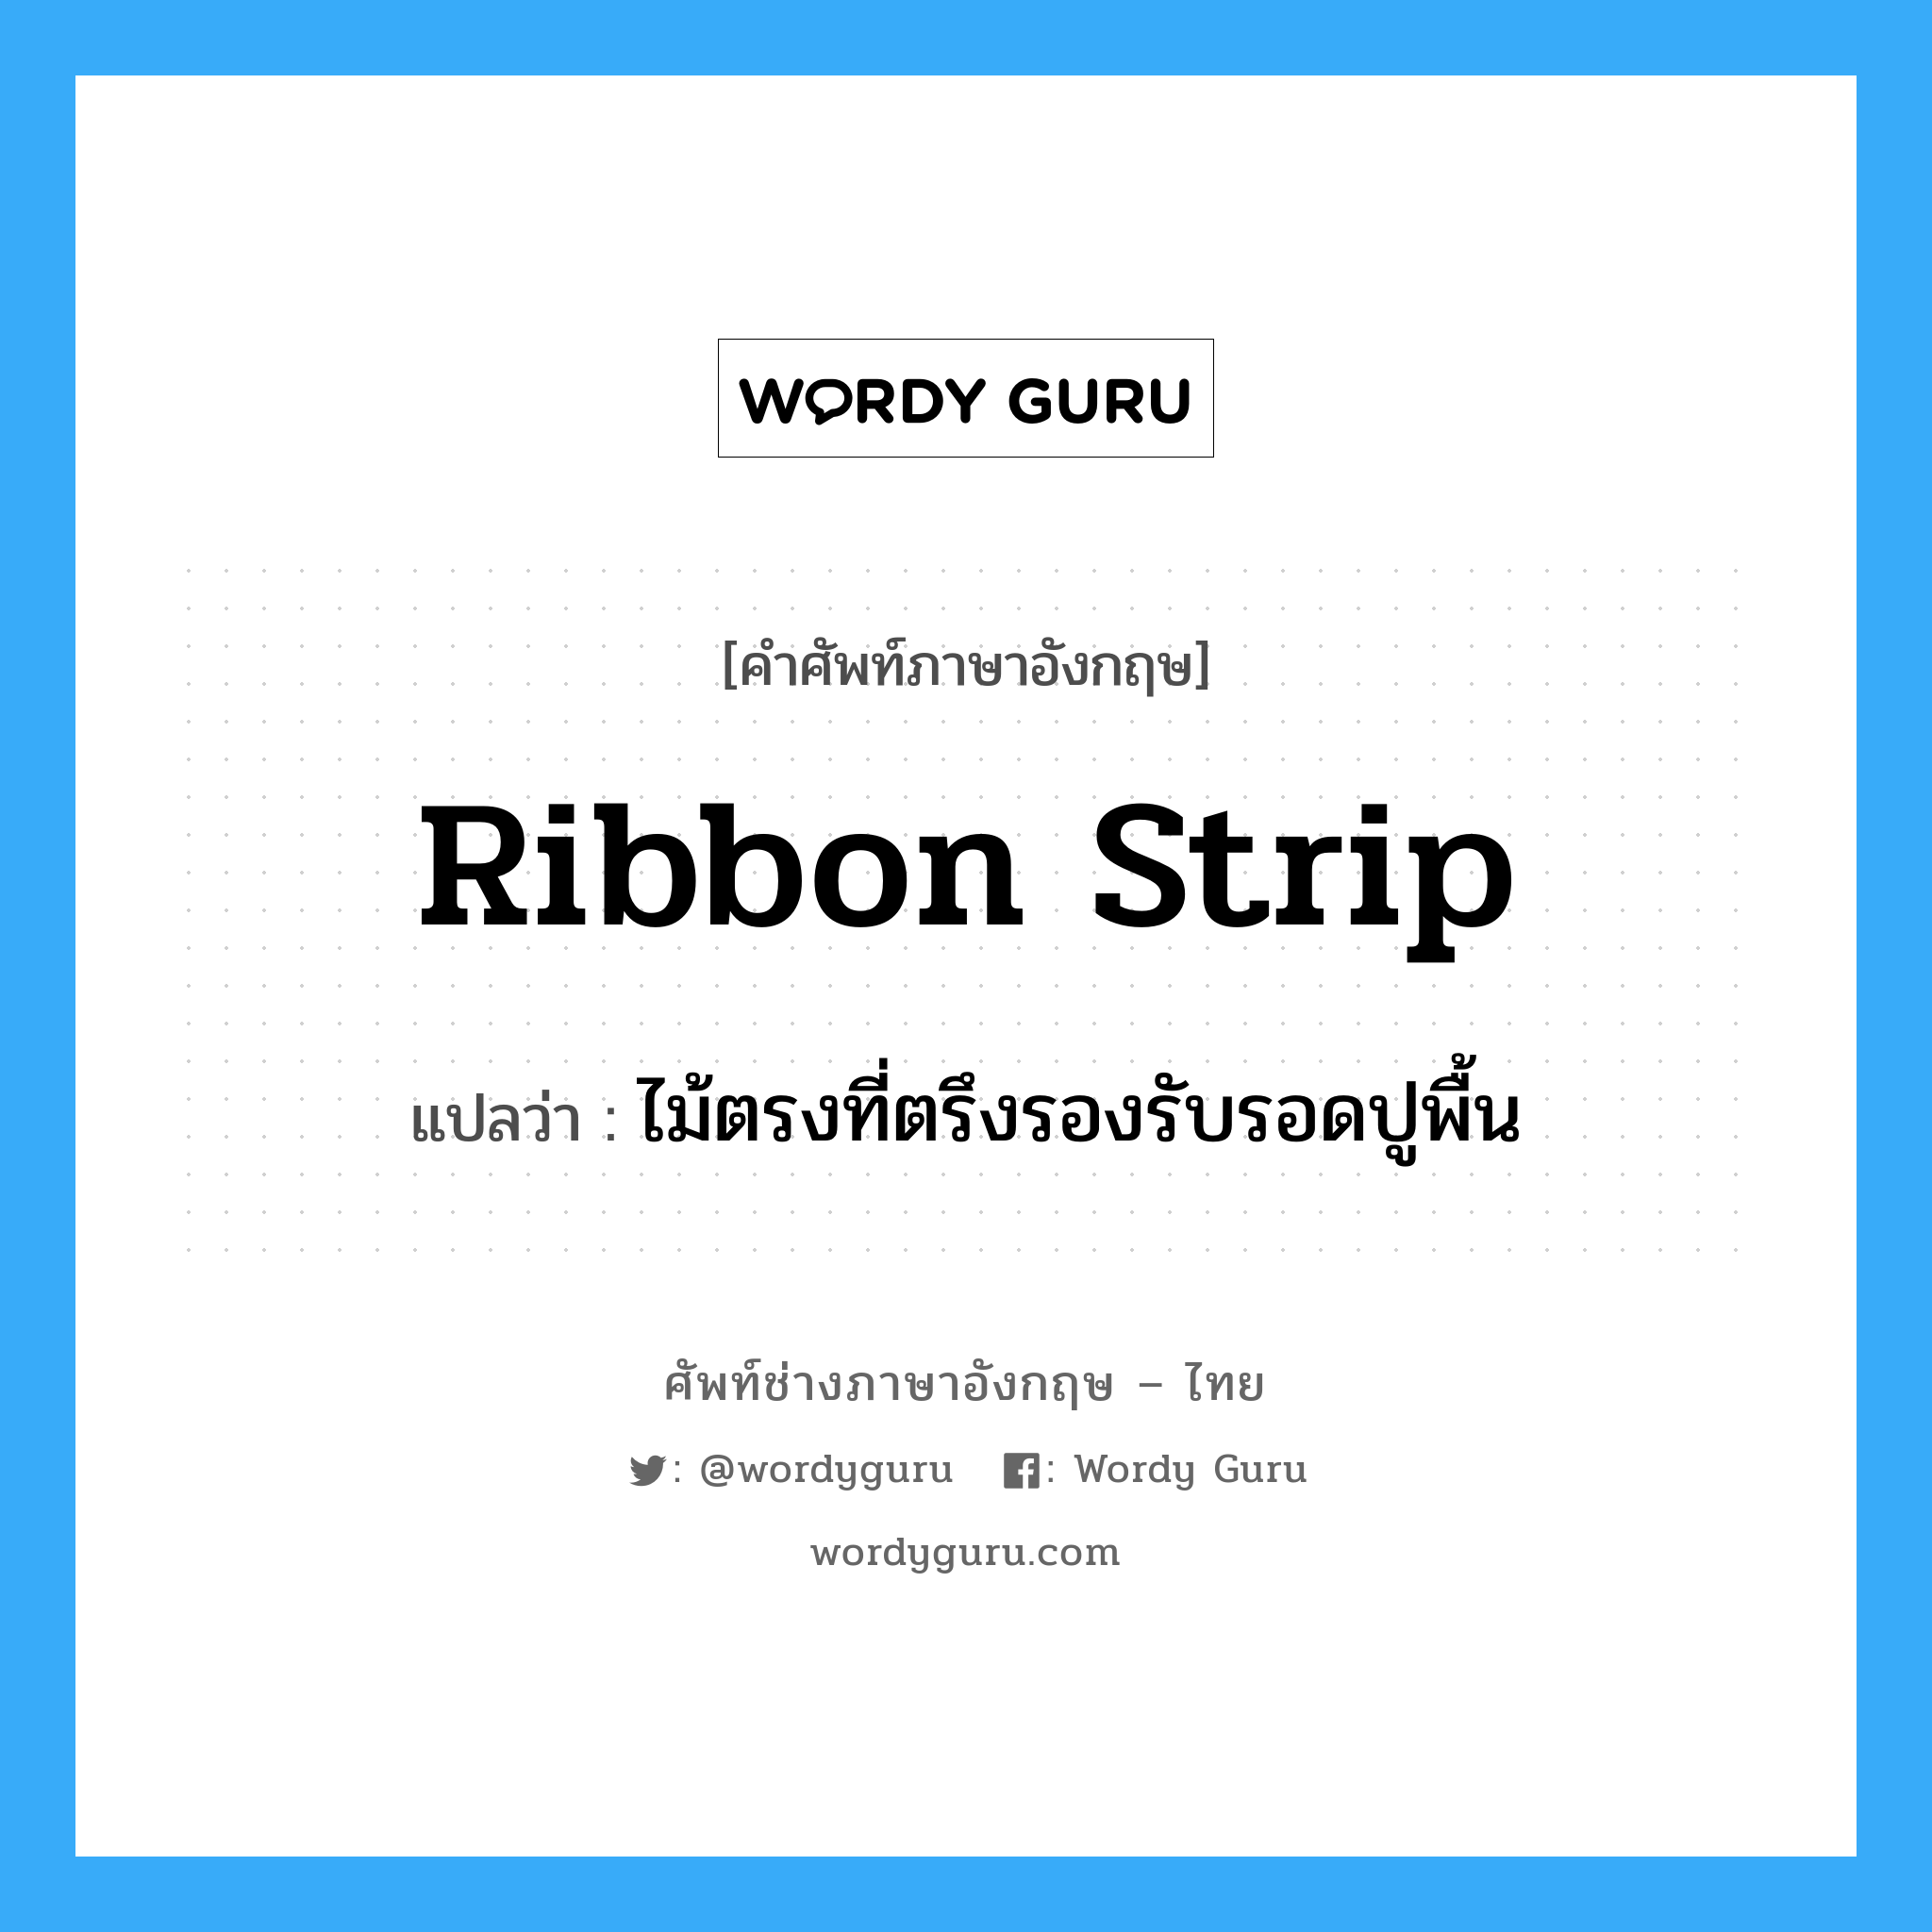 ribbon strip แปลว่า?, คำศัพท์ช่างภาษาอังกฤษ - ไทย ribbon strip คำศัพท์ภาษาอังกฤษ ribbon strip แปลว่า ไม้ตรงที่ตรึงรองรับรอดปูพื้น